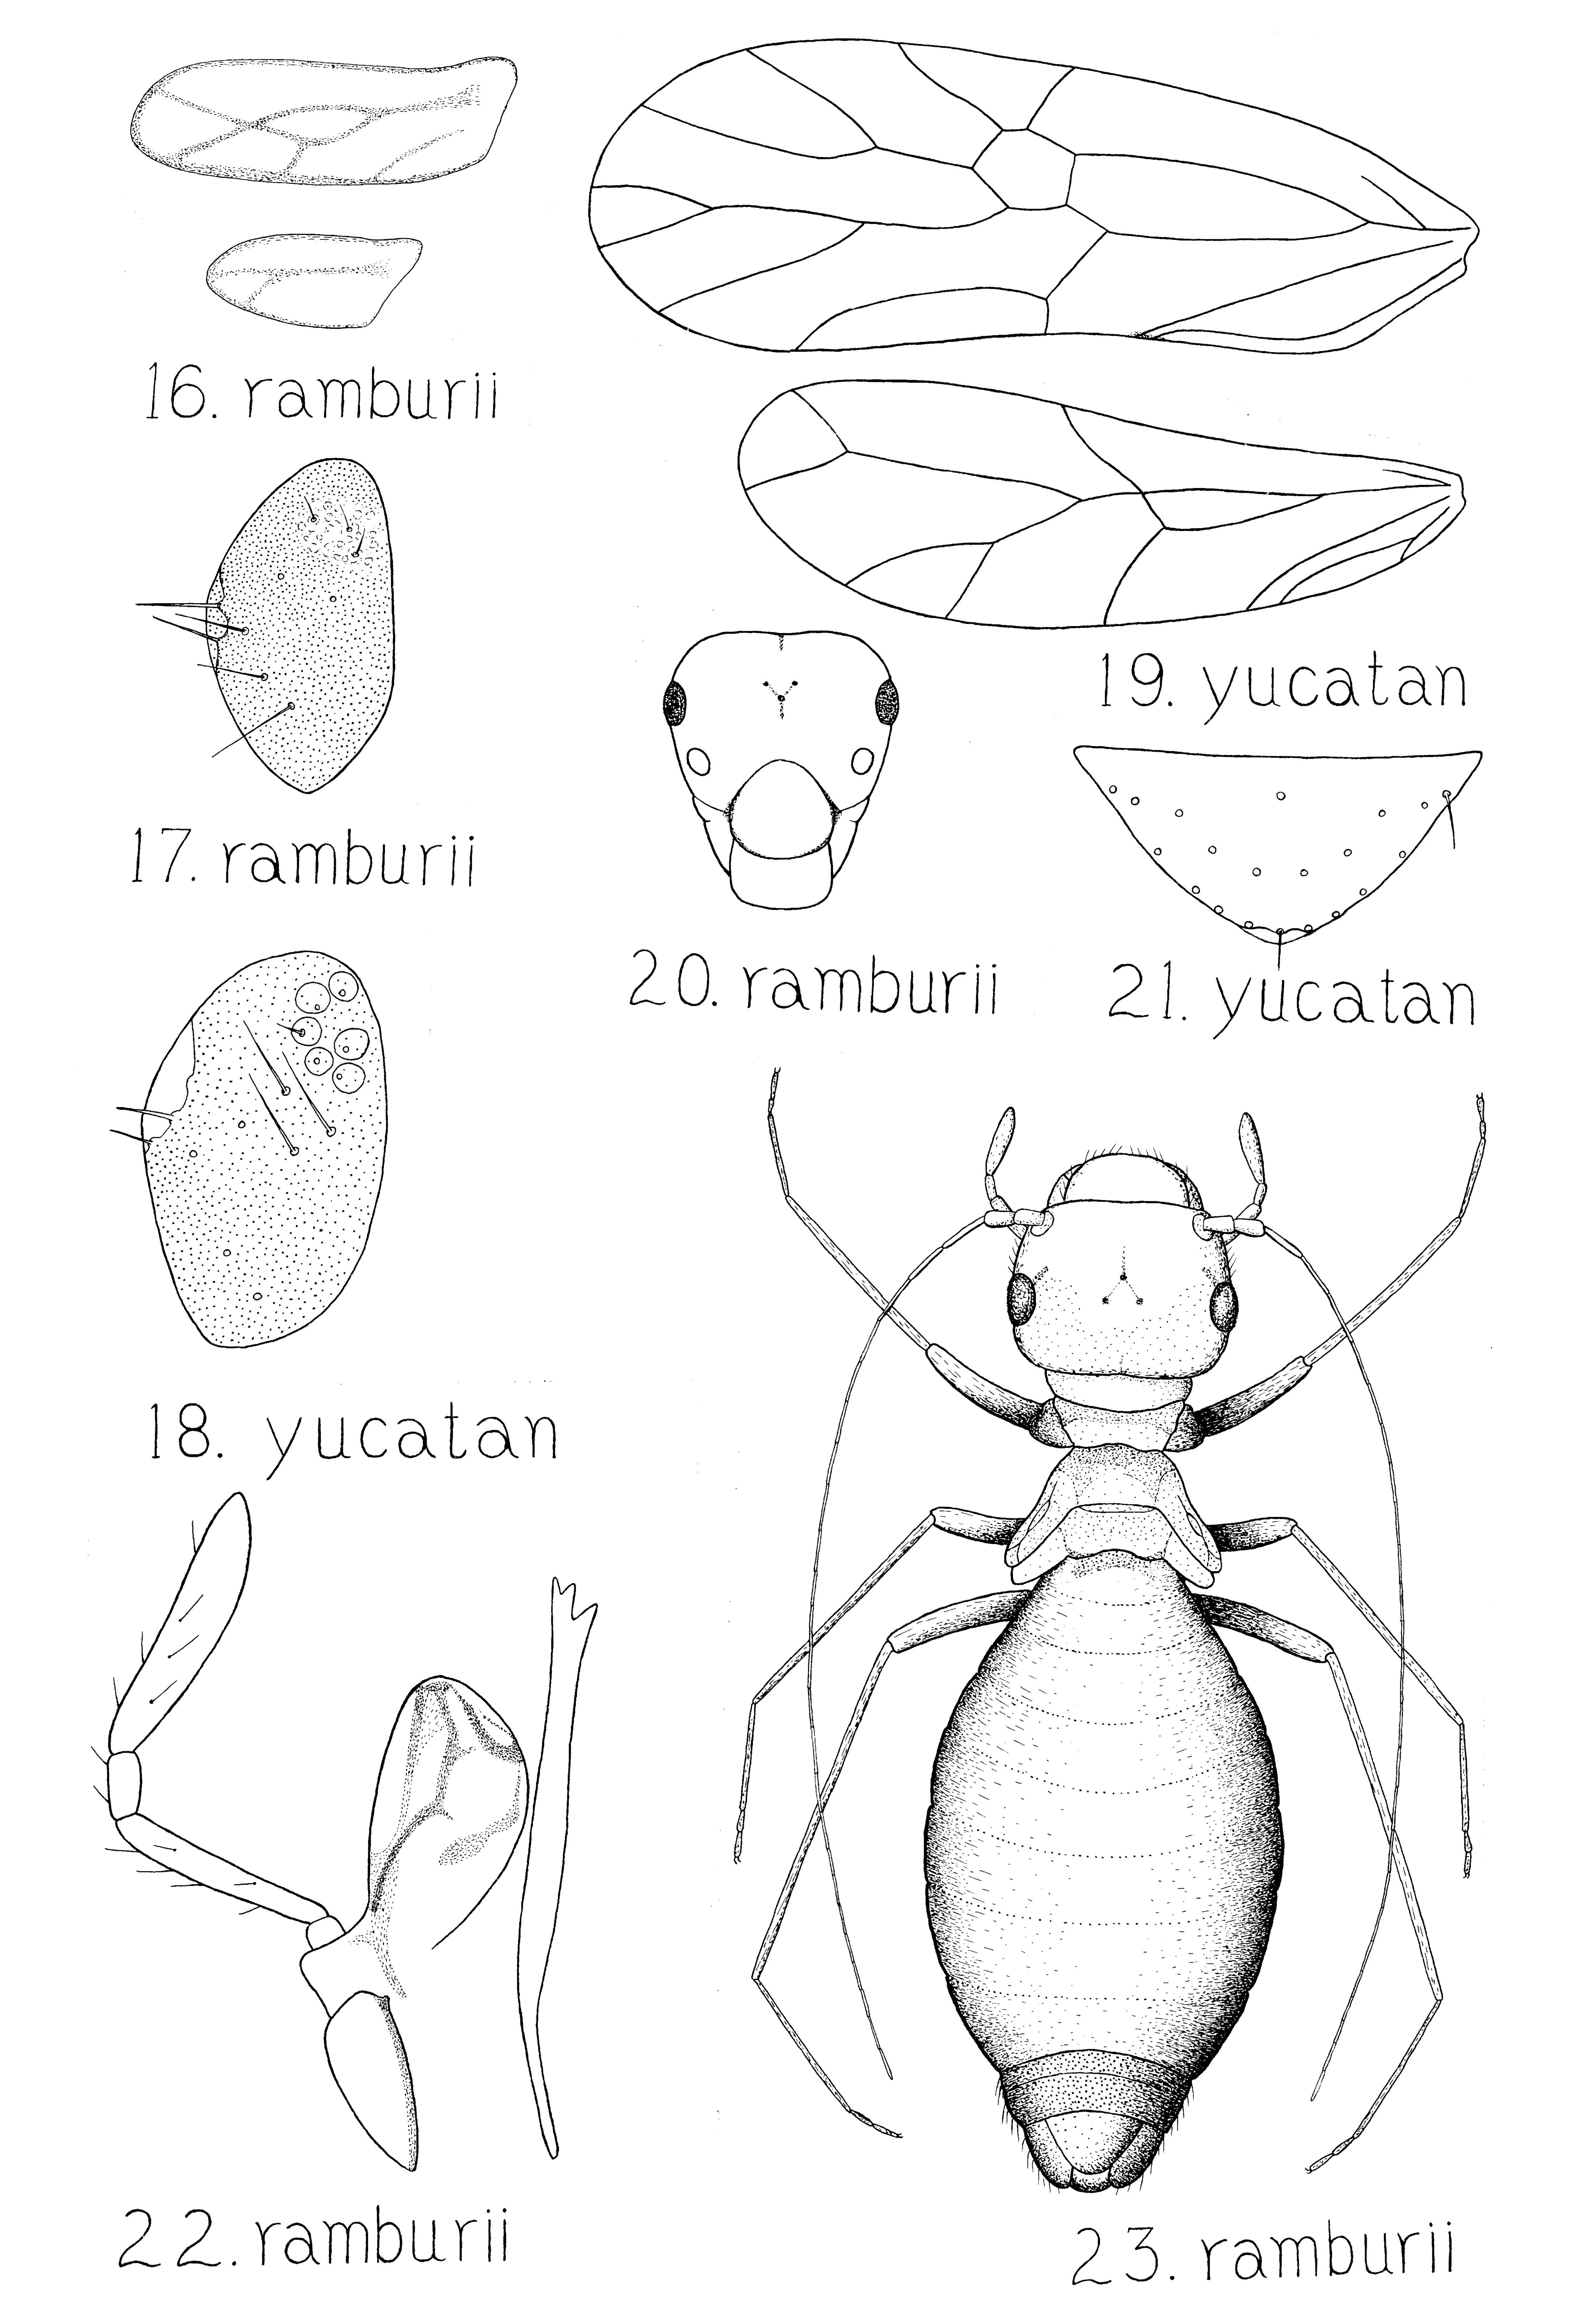 Image of Paraneoptera